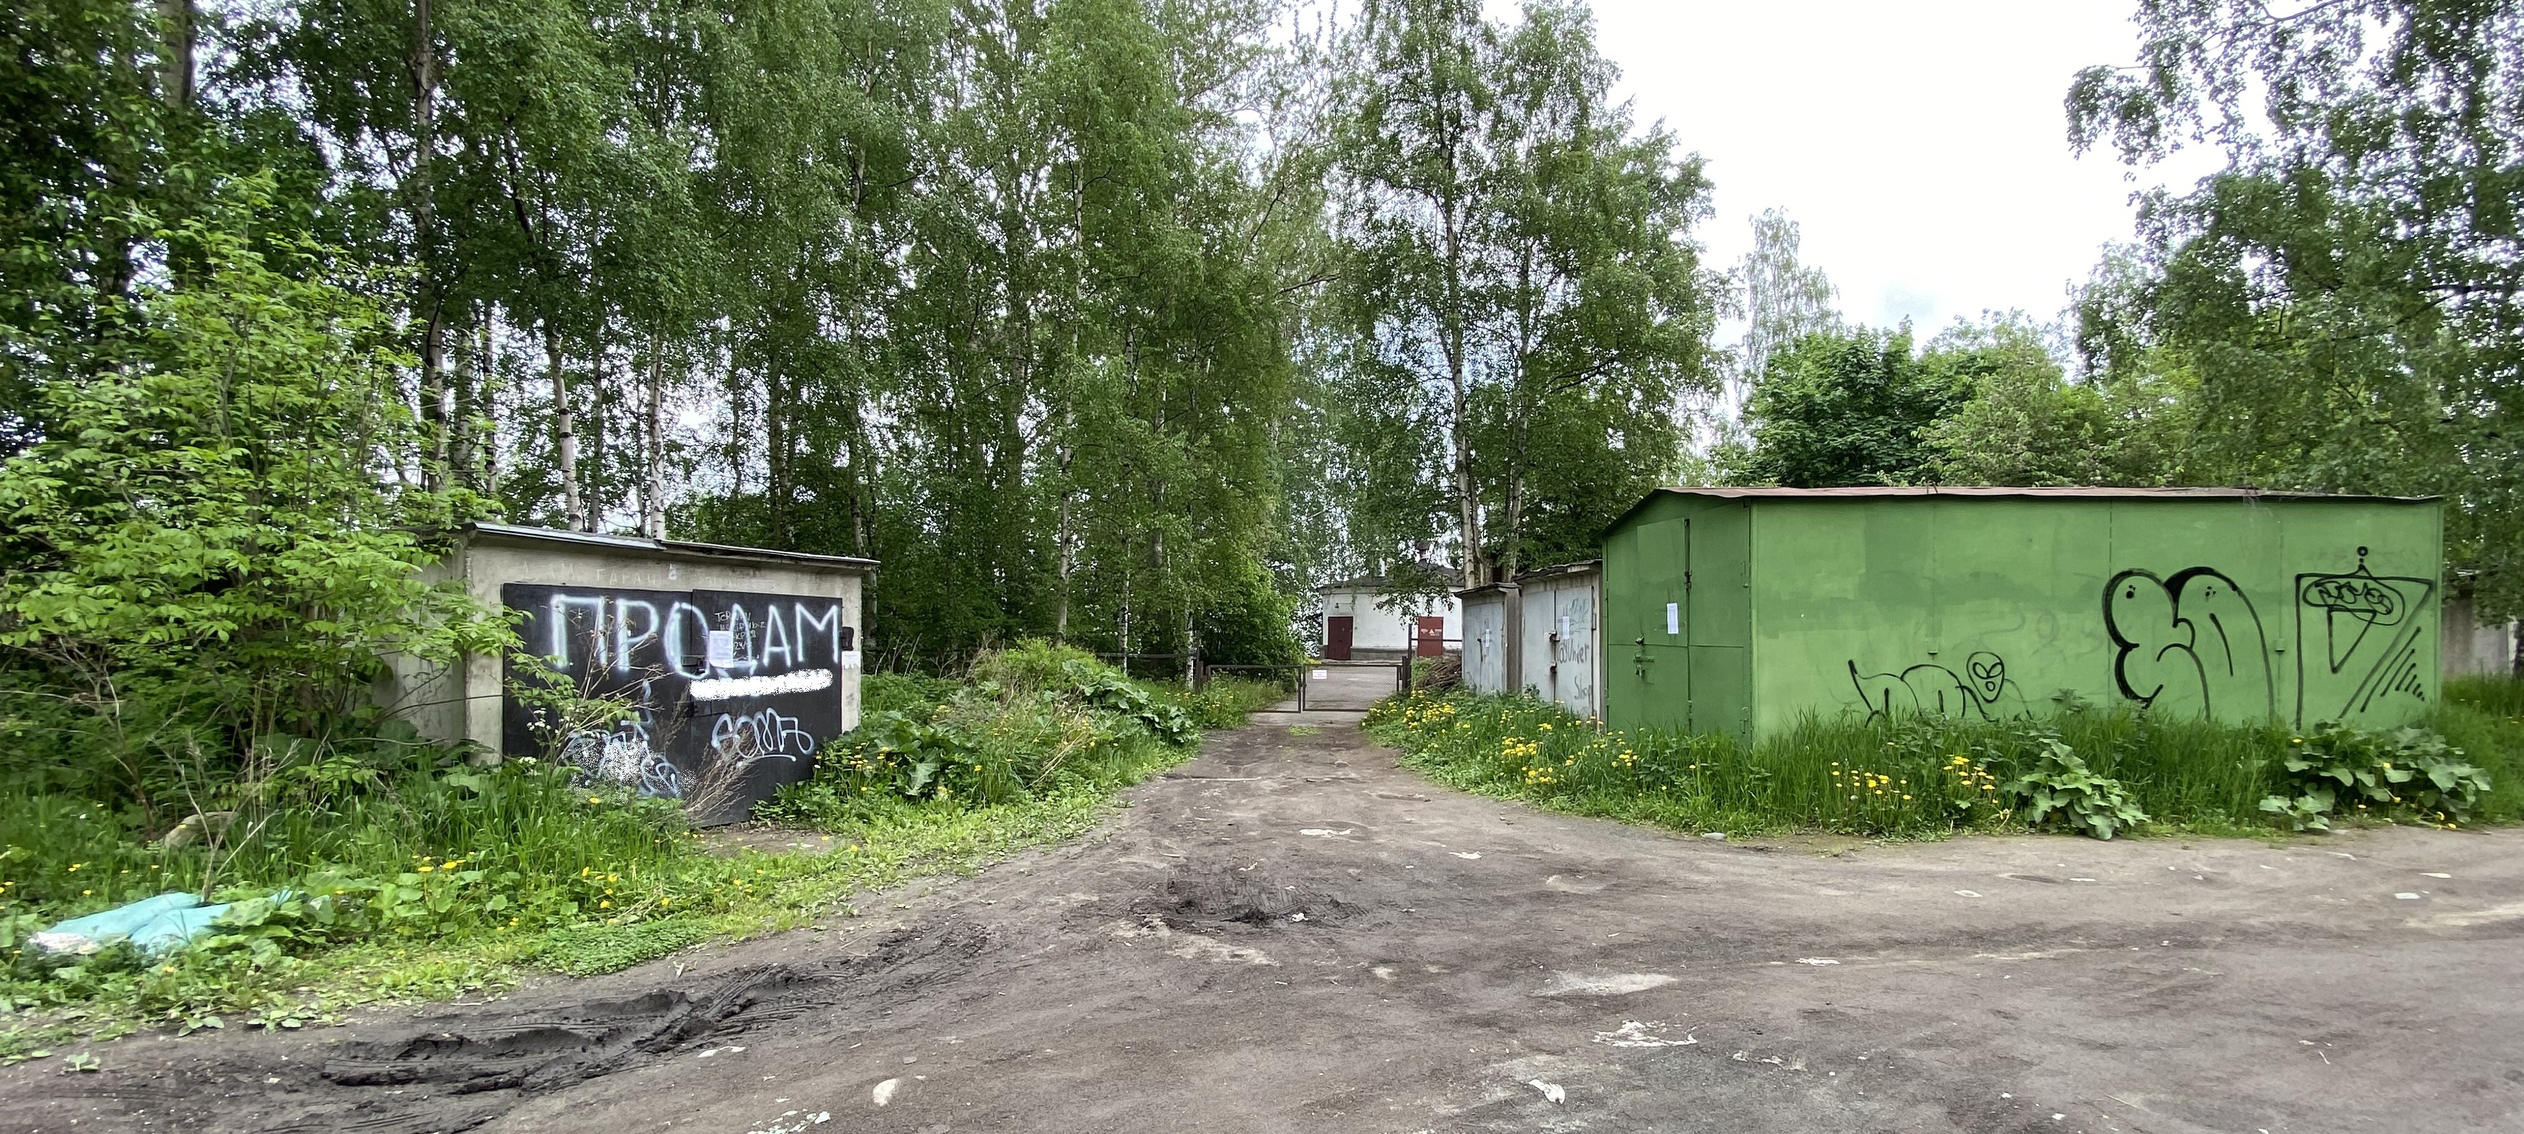 Власти снесут гаражи в прибрежной зоне Петрозаводска